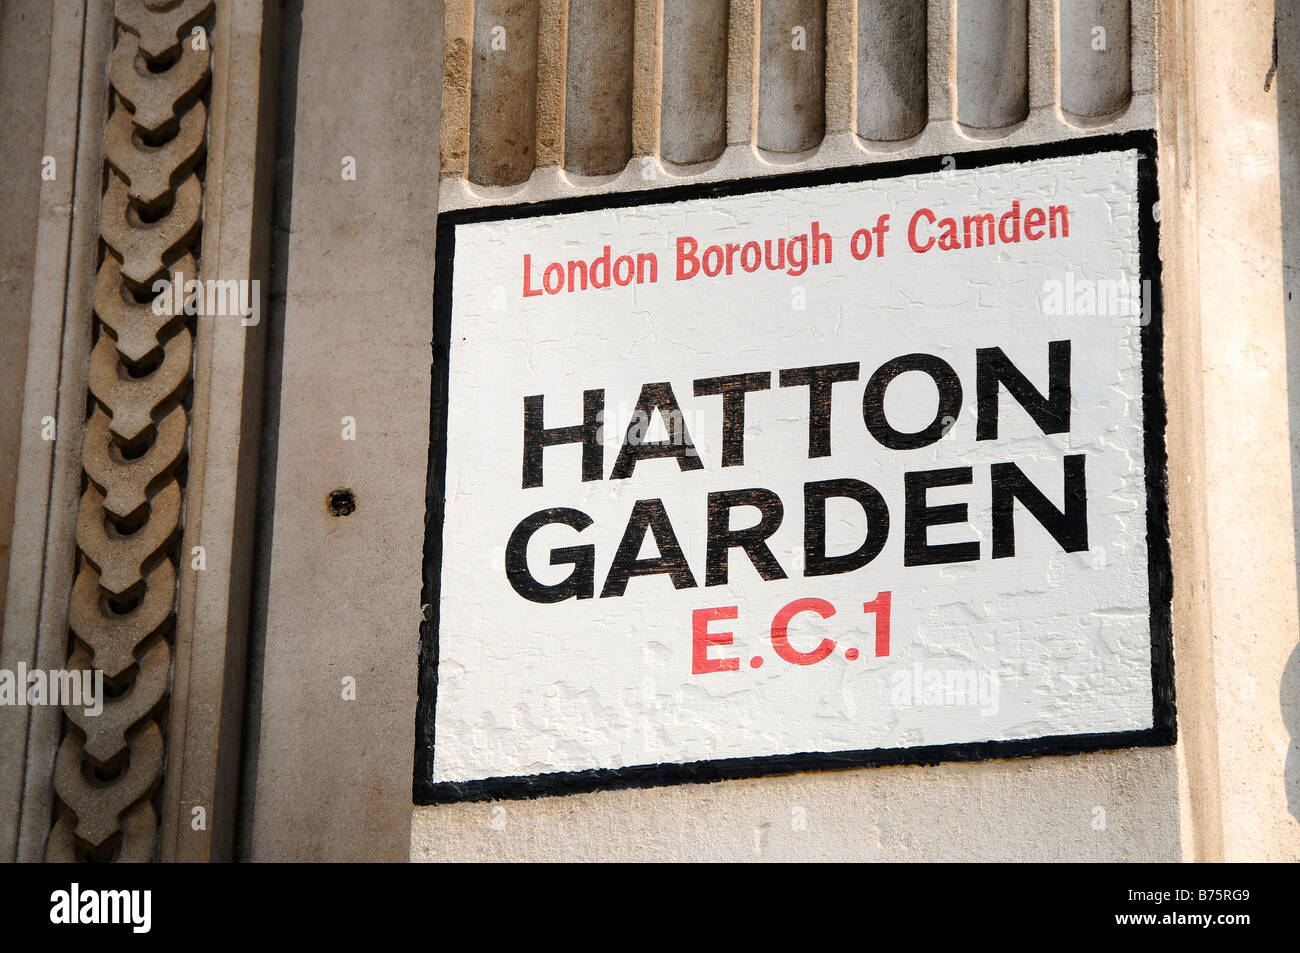 Hatton Garden street sign, London, England Stock Photo - Alamy